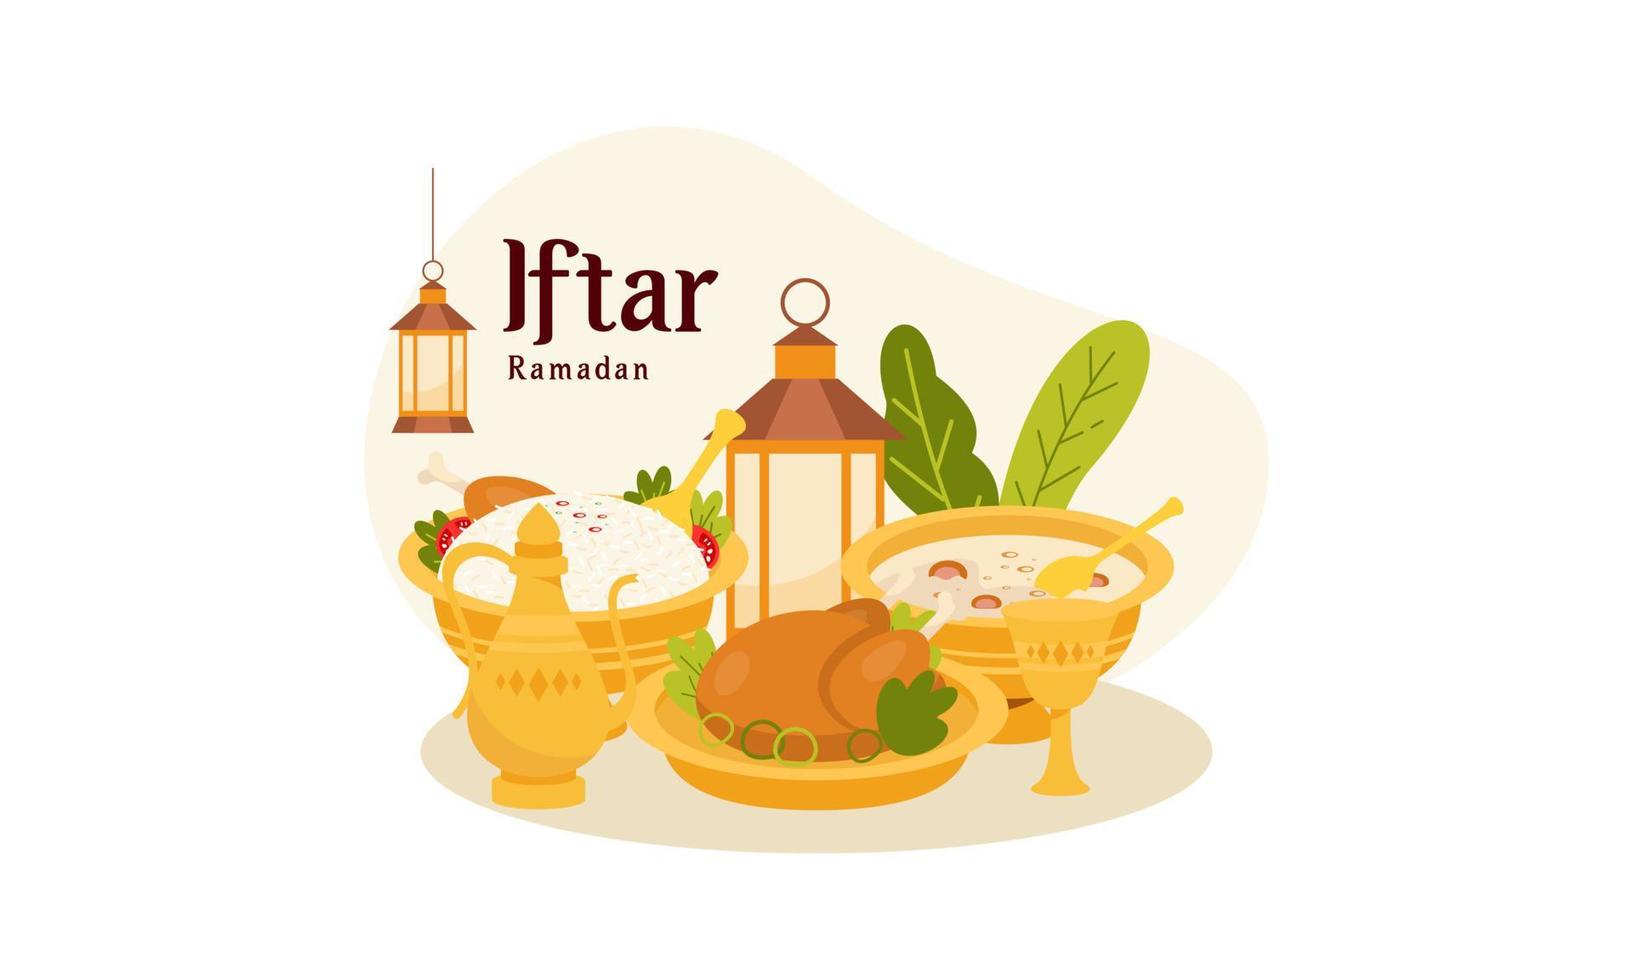 Ramadan kareem met iftar vastend voedsel illustratie vector